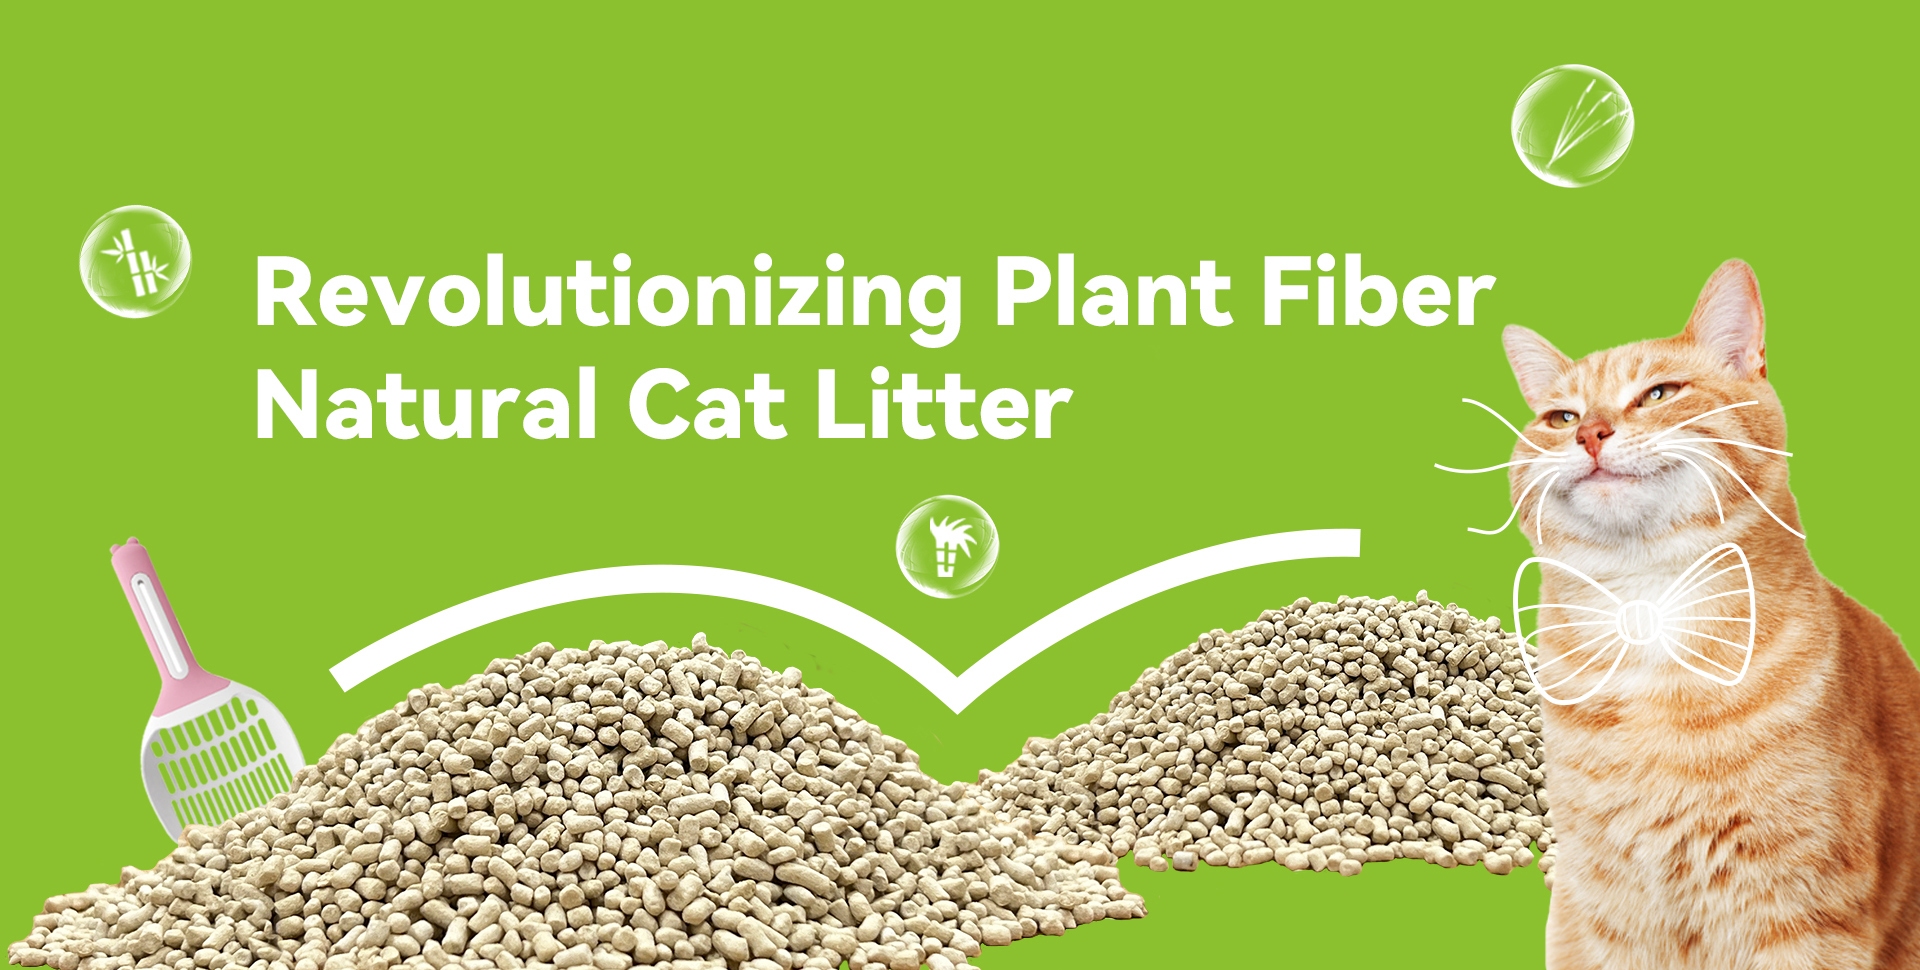 Plant Fiber Cat Litter